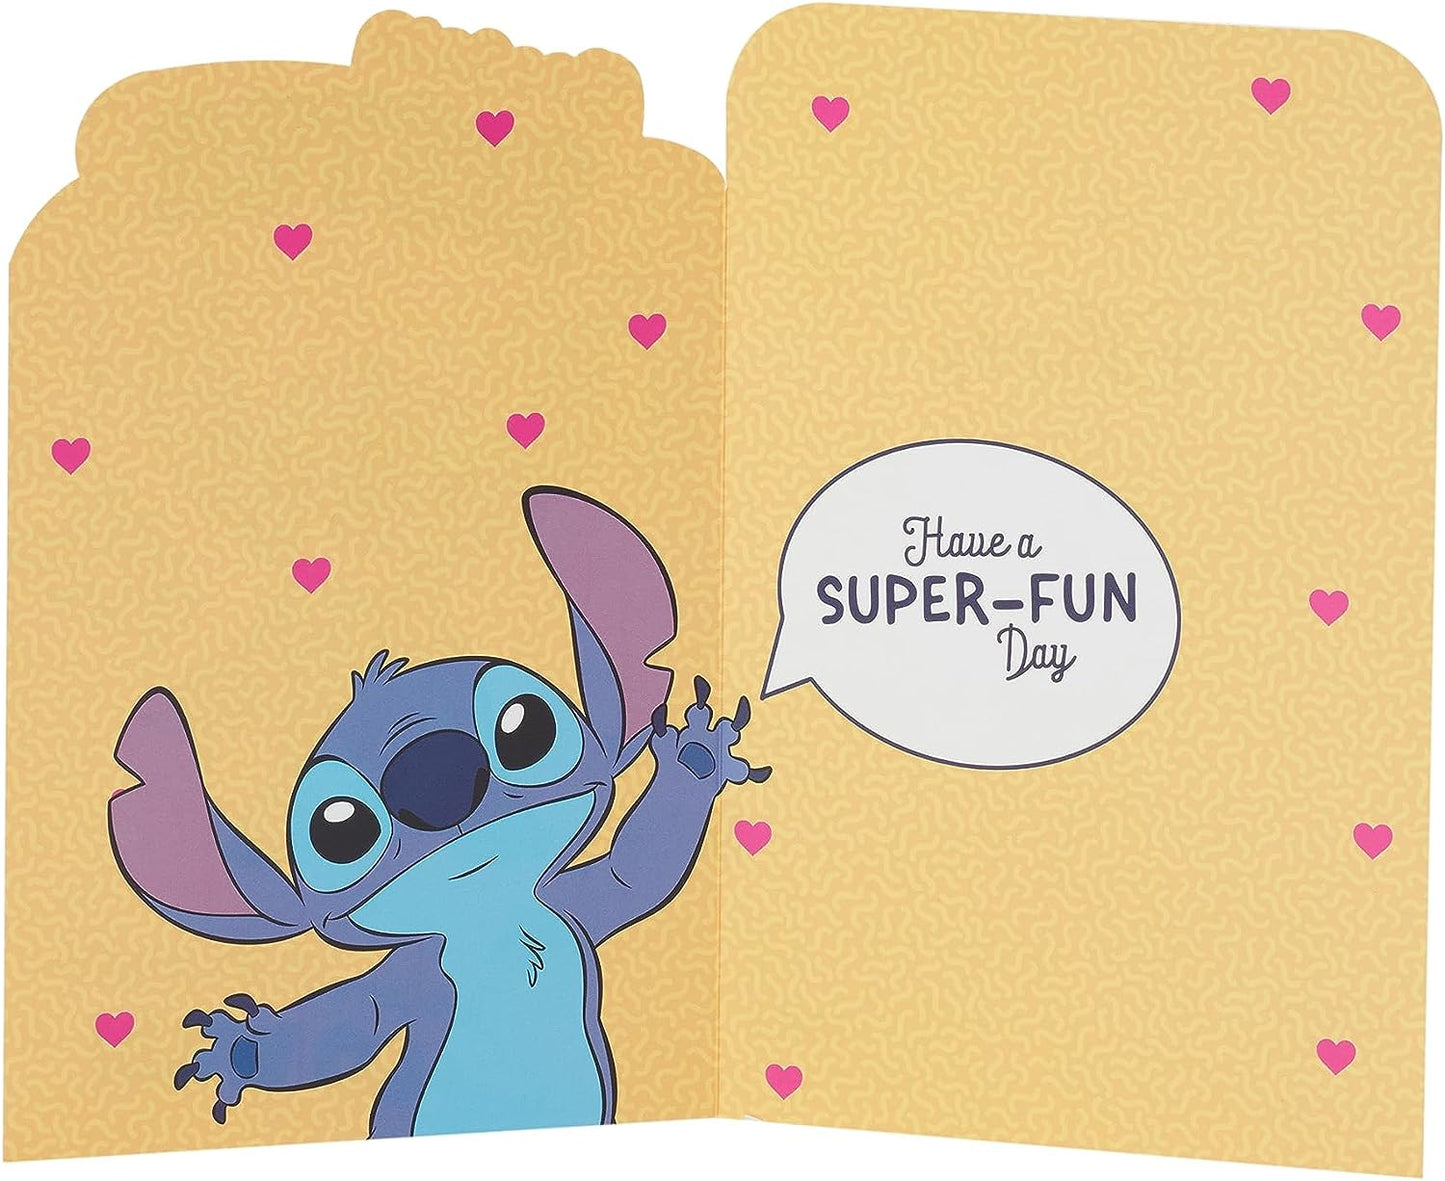 Stitch Design Disney Sister Birthday Card